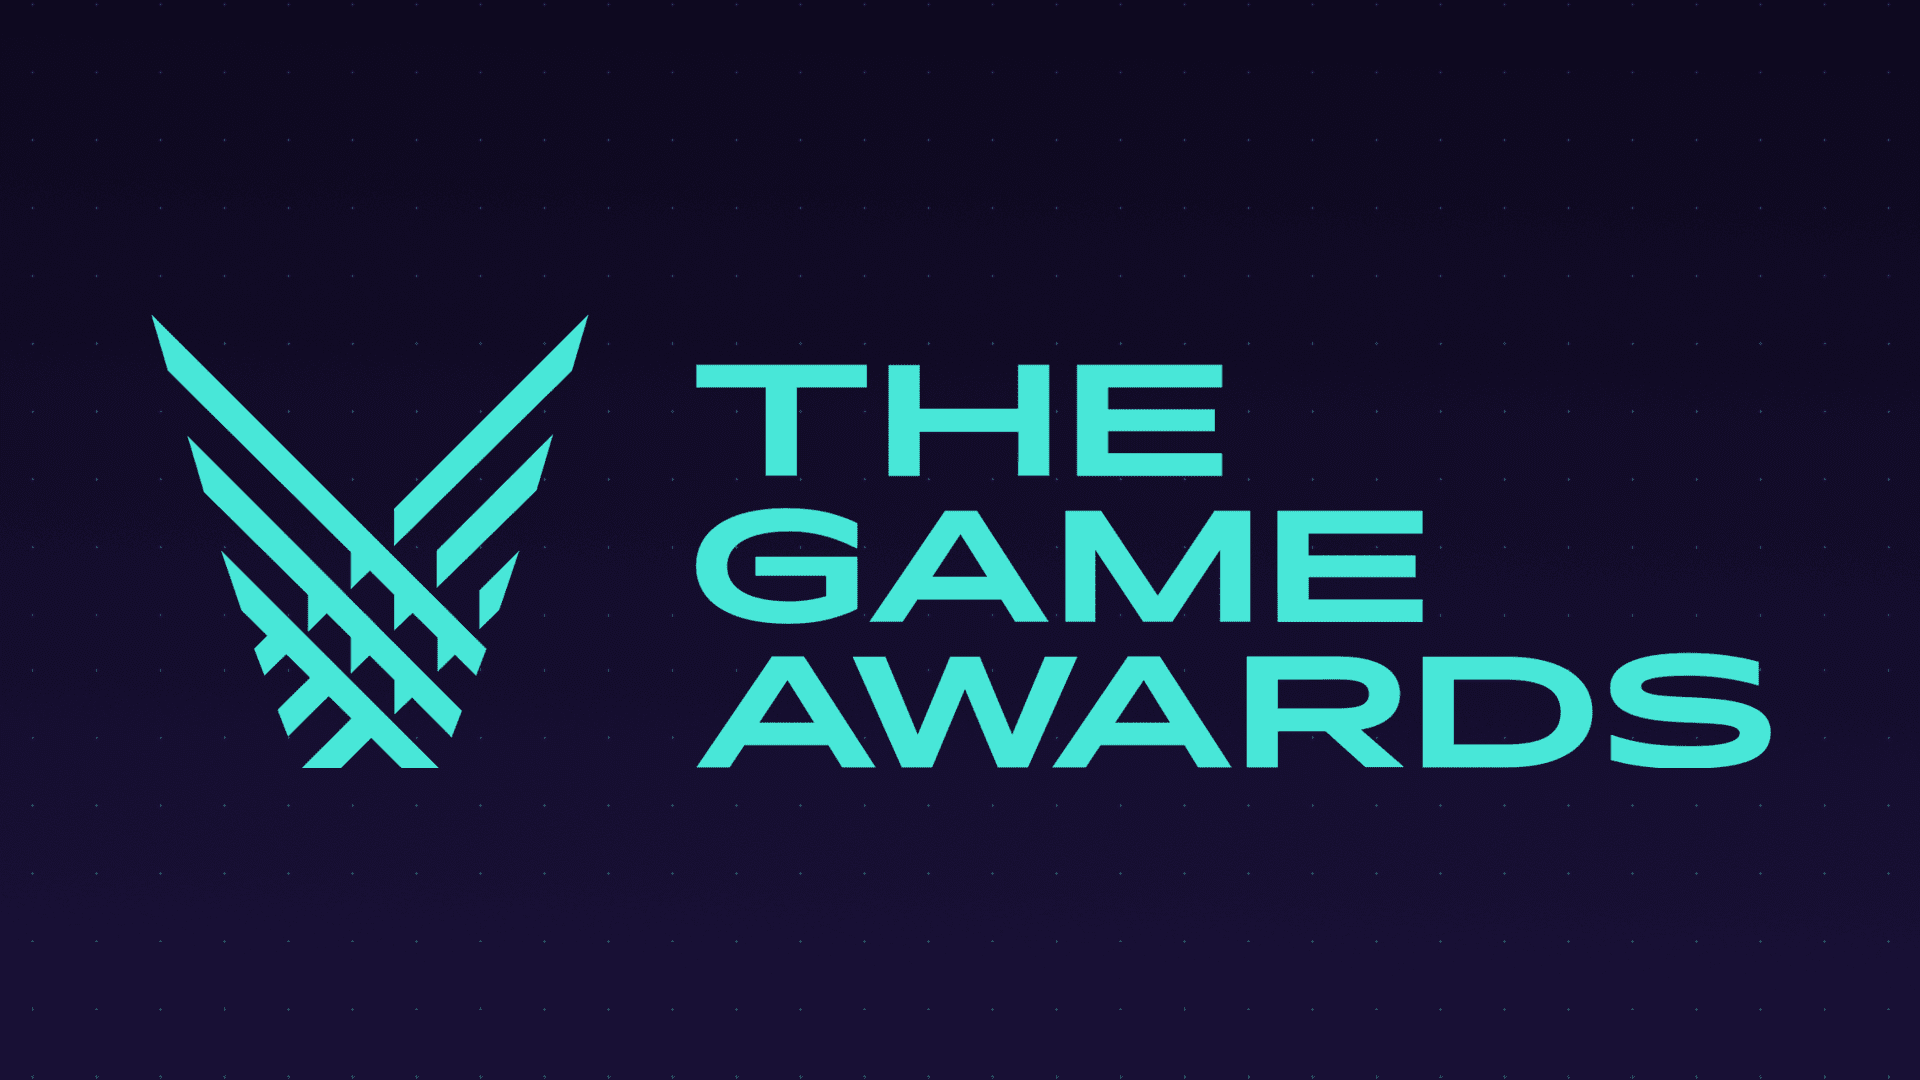 The game awards logo font